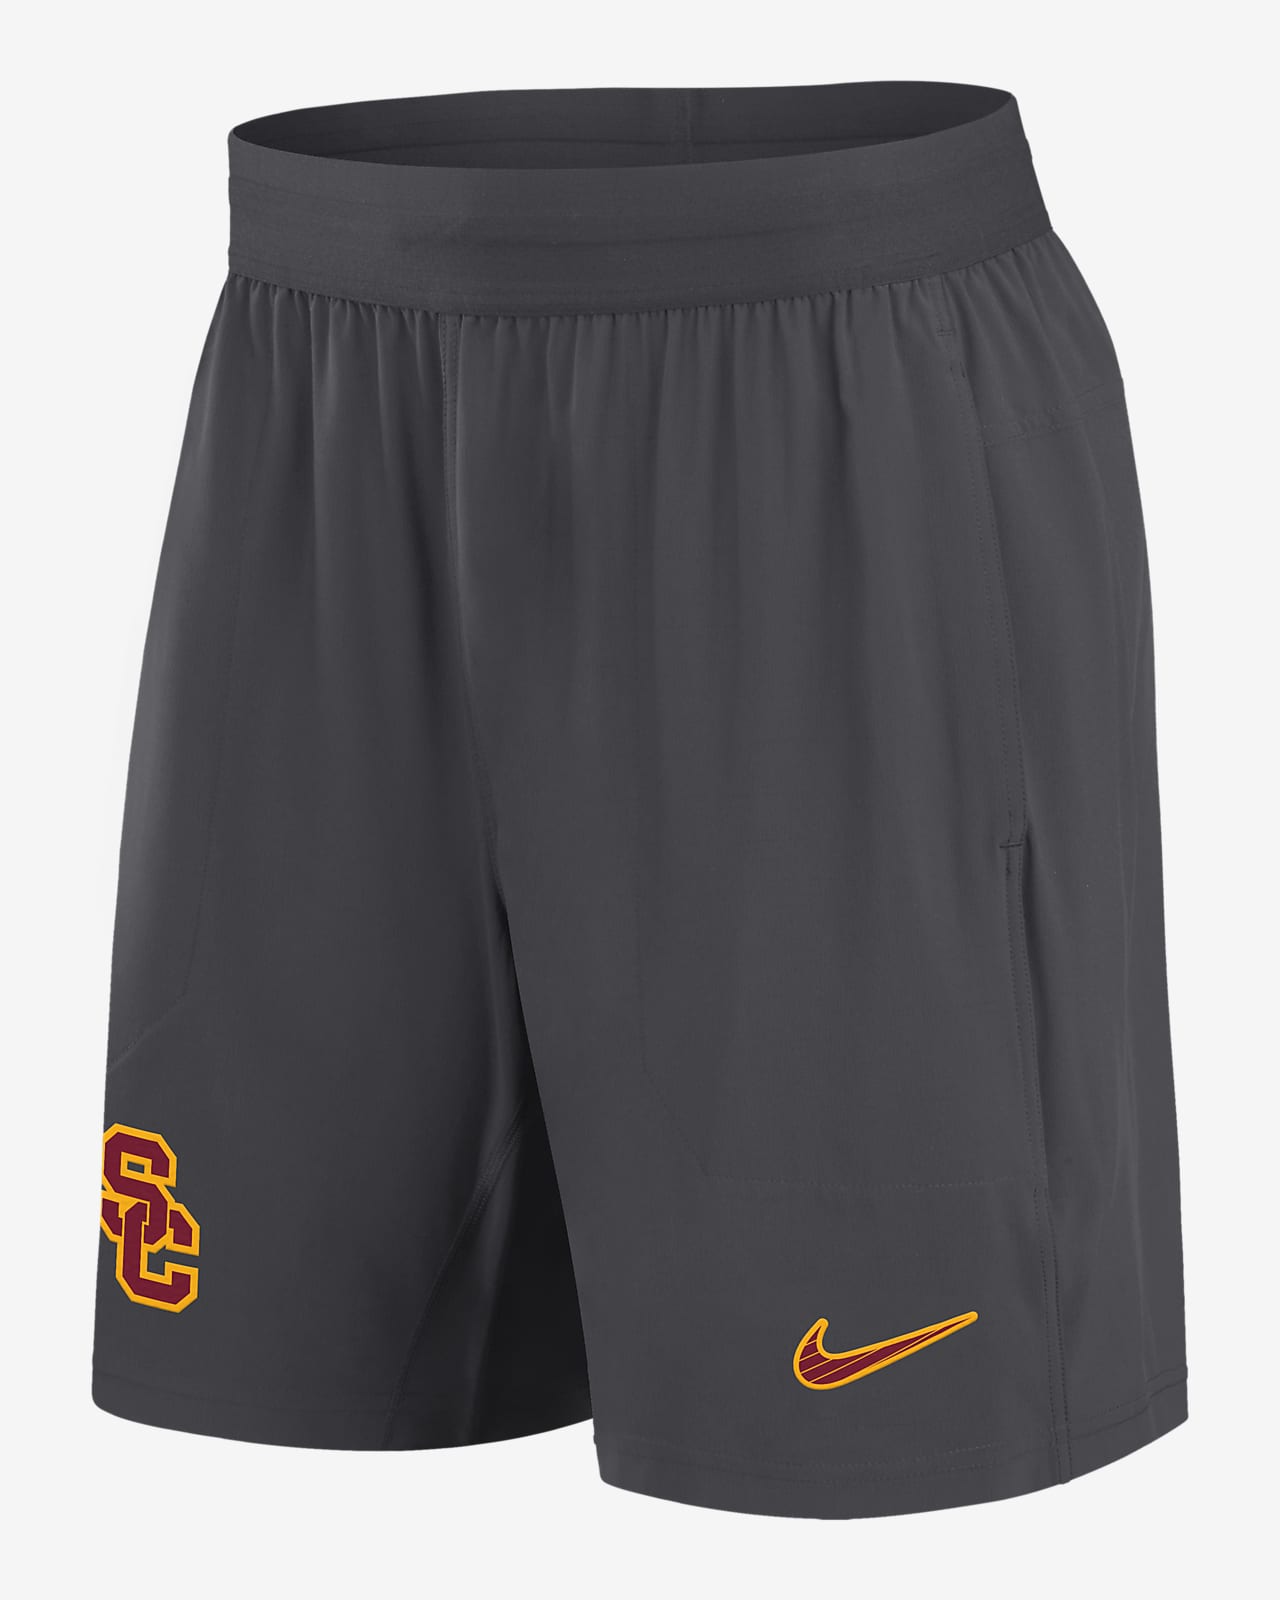 Shorts universitarios Nike Dri-FIT para hombre USC Trojans Sideline